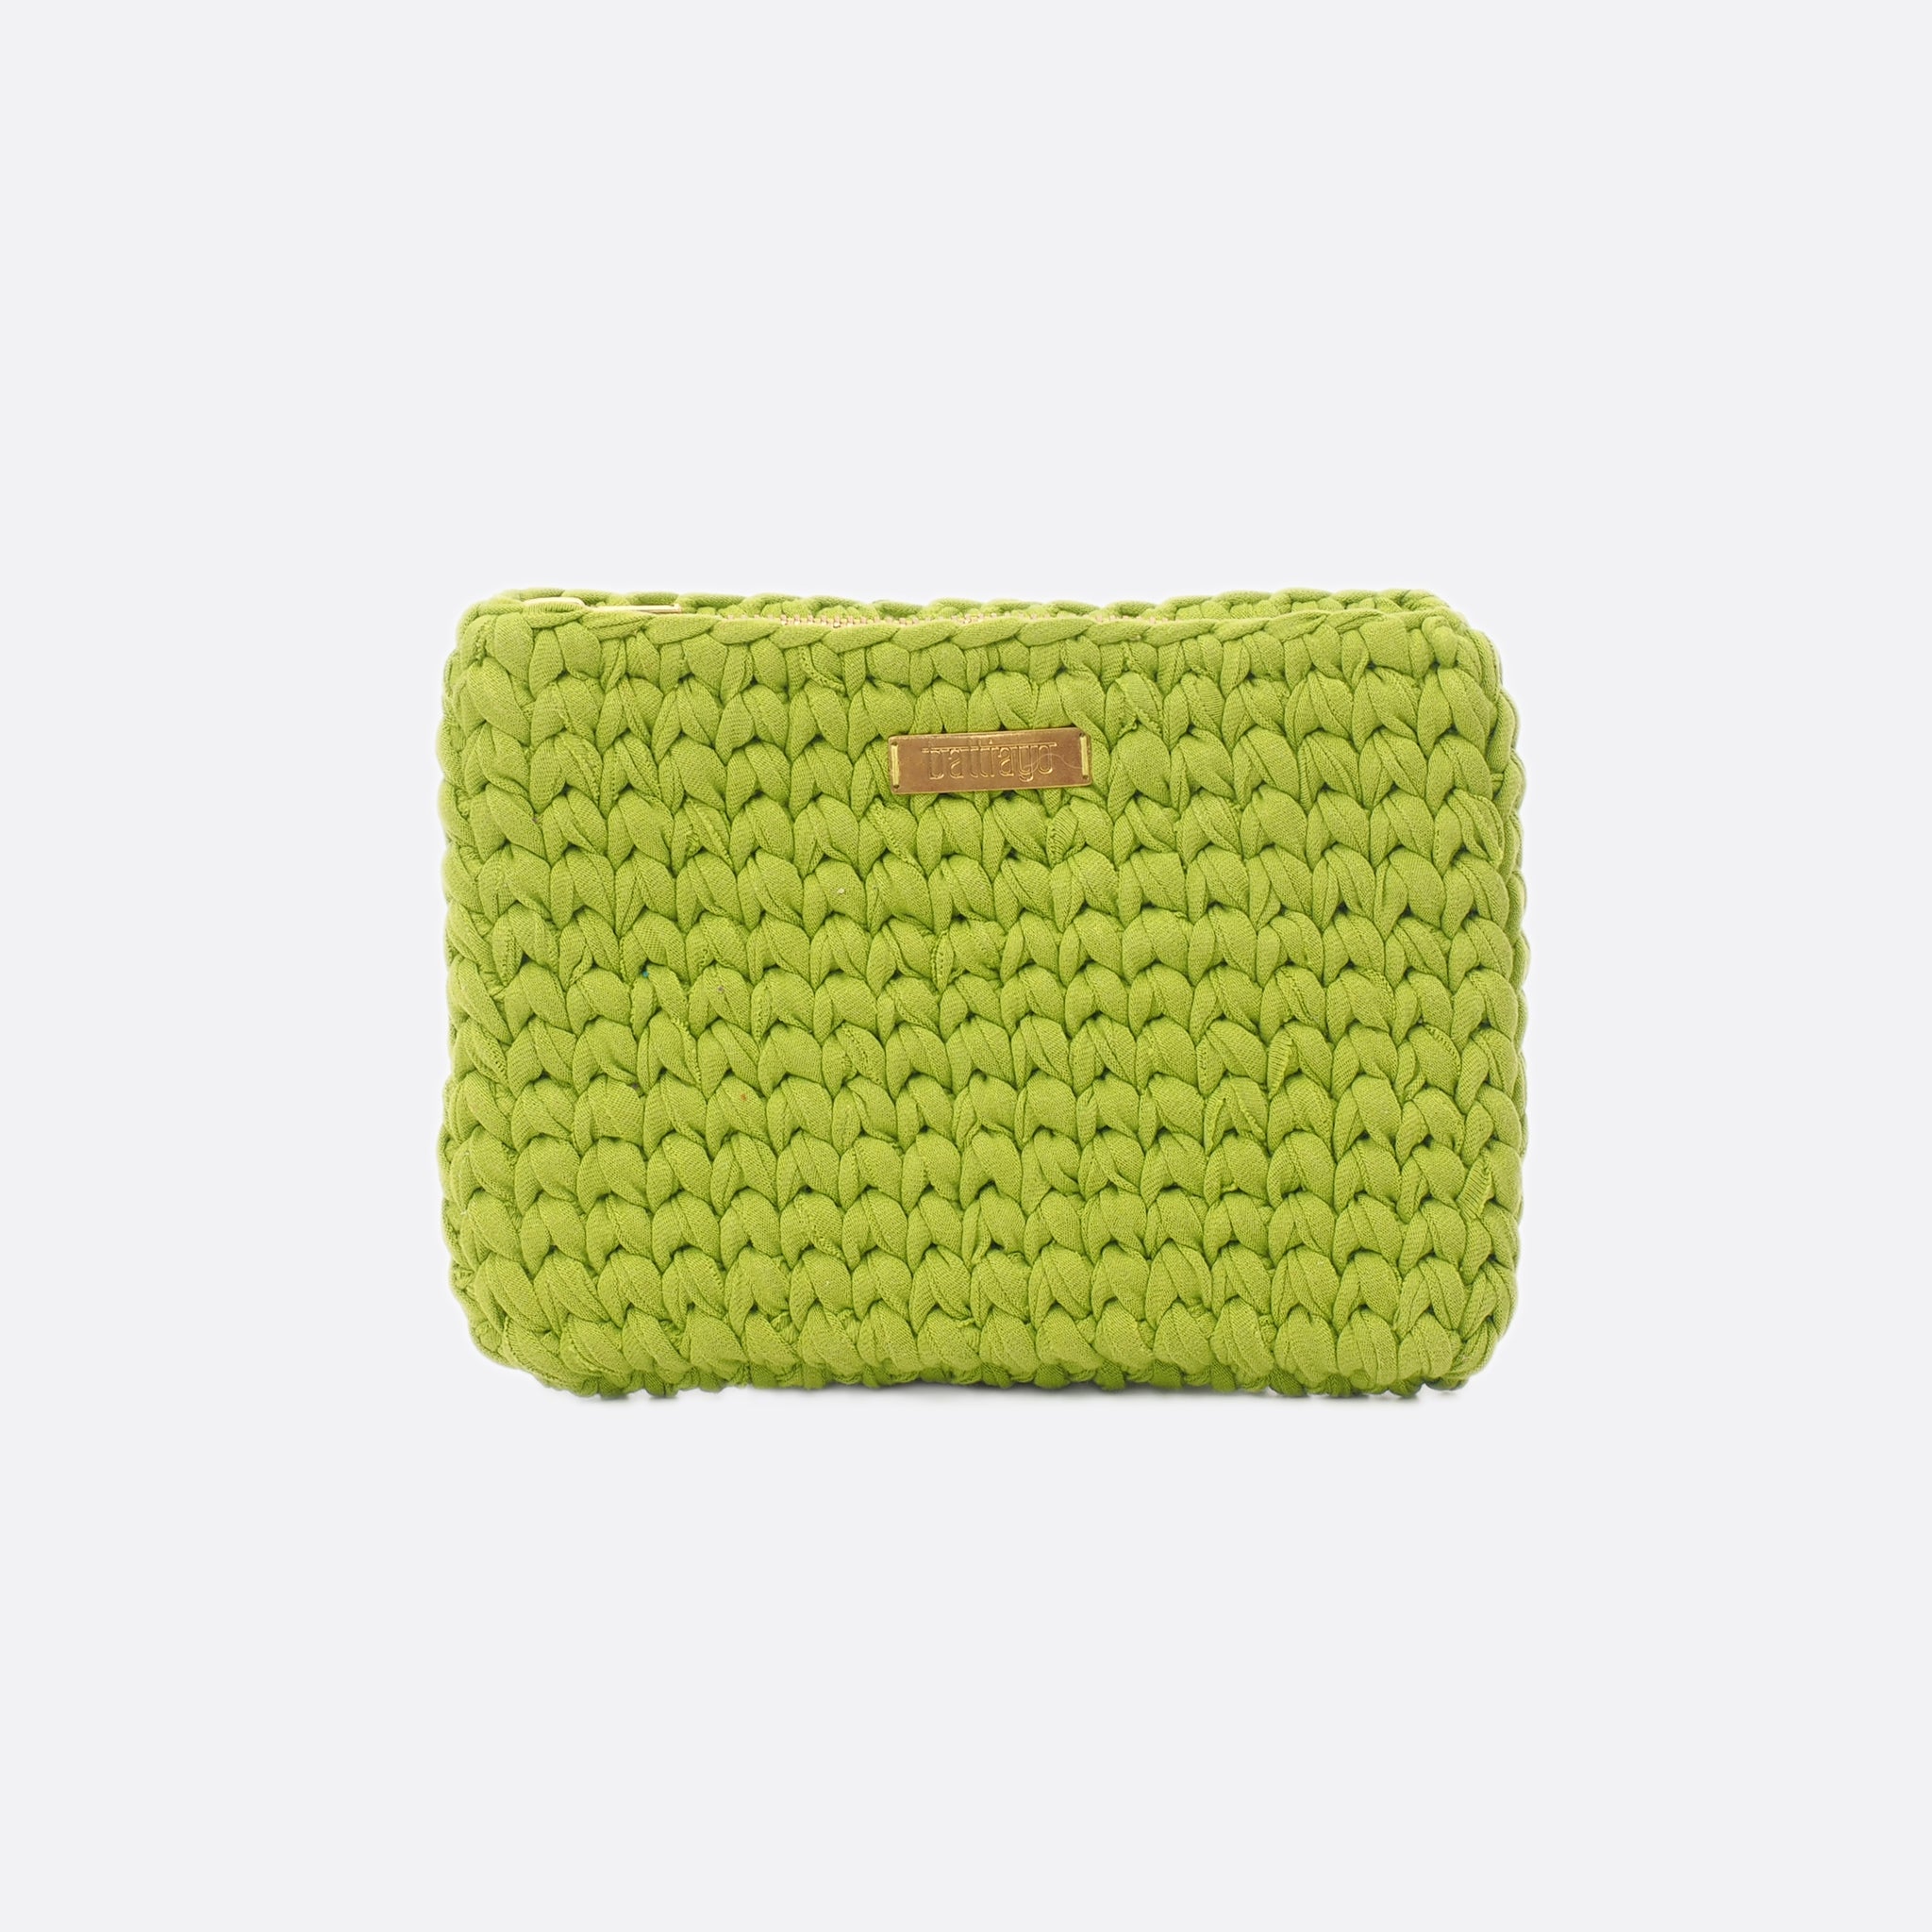 Green 'Clutch' Bag - Medium